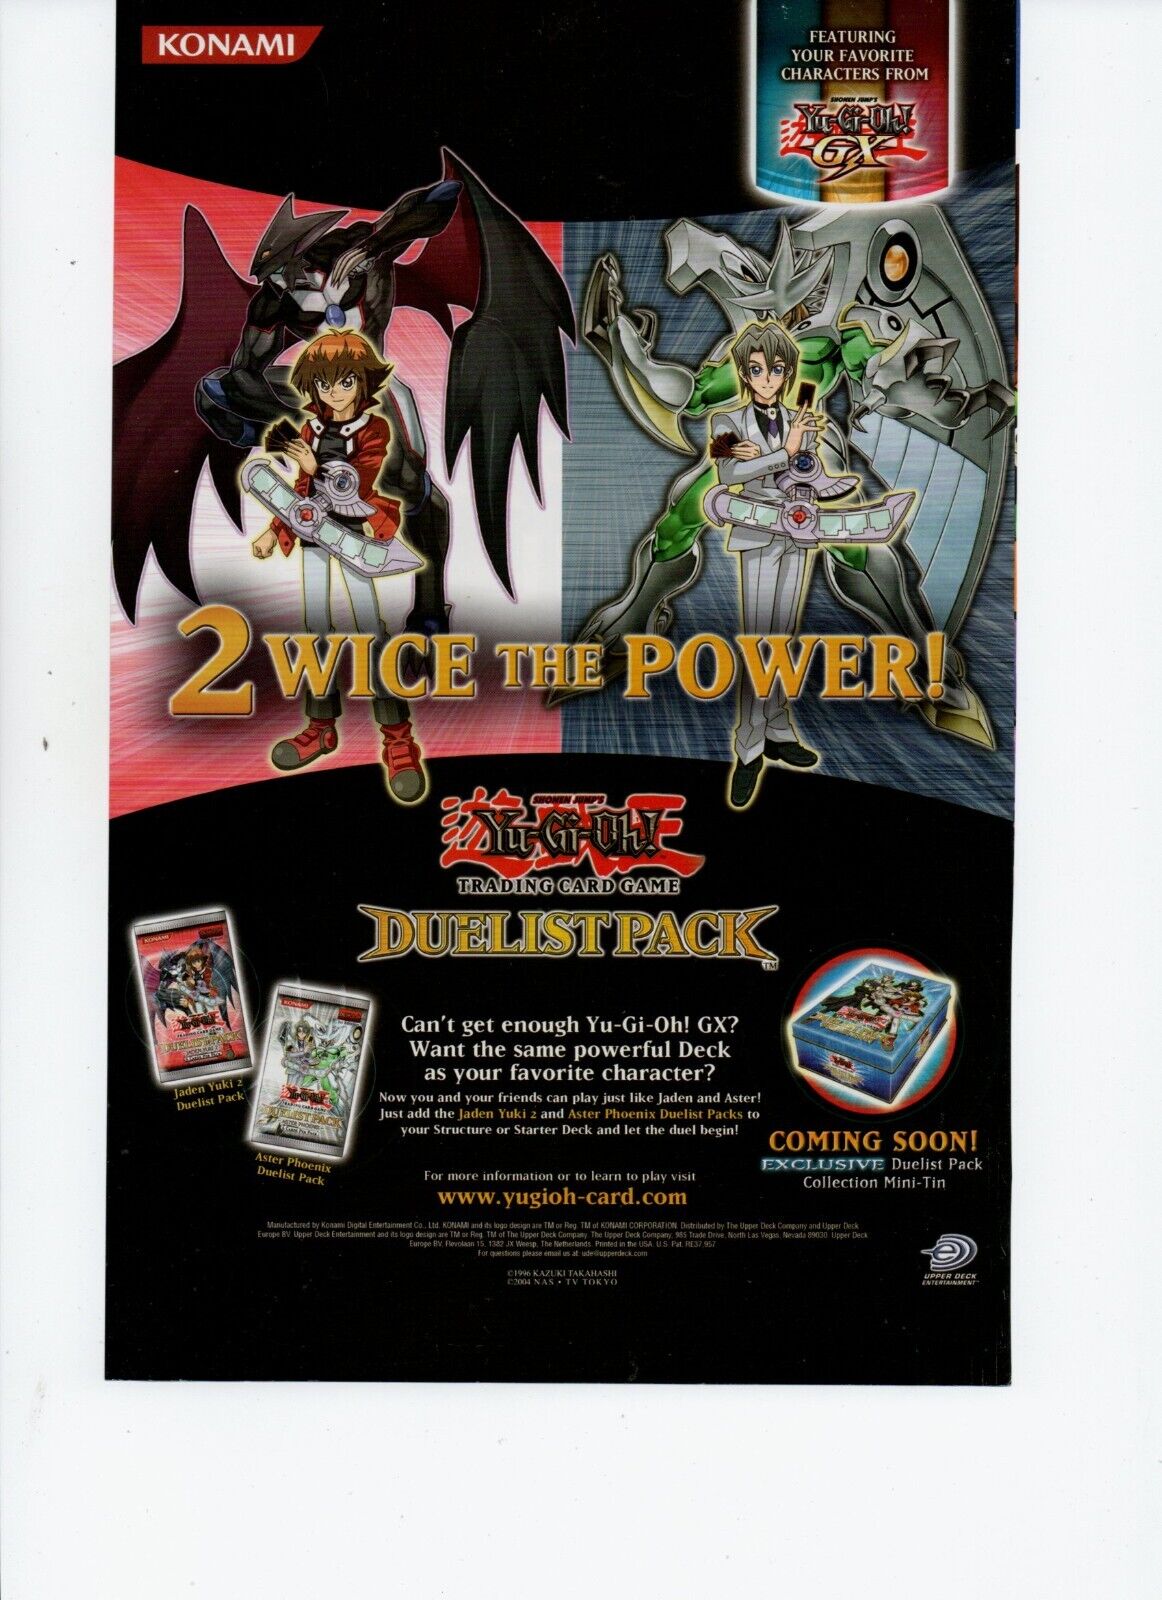 2007 Print Ad Art - Yu-Gi-Oh Trading Card Game Duelist Pack Konami